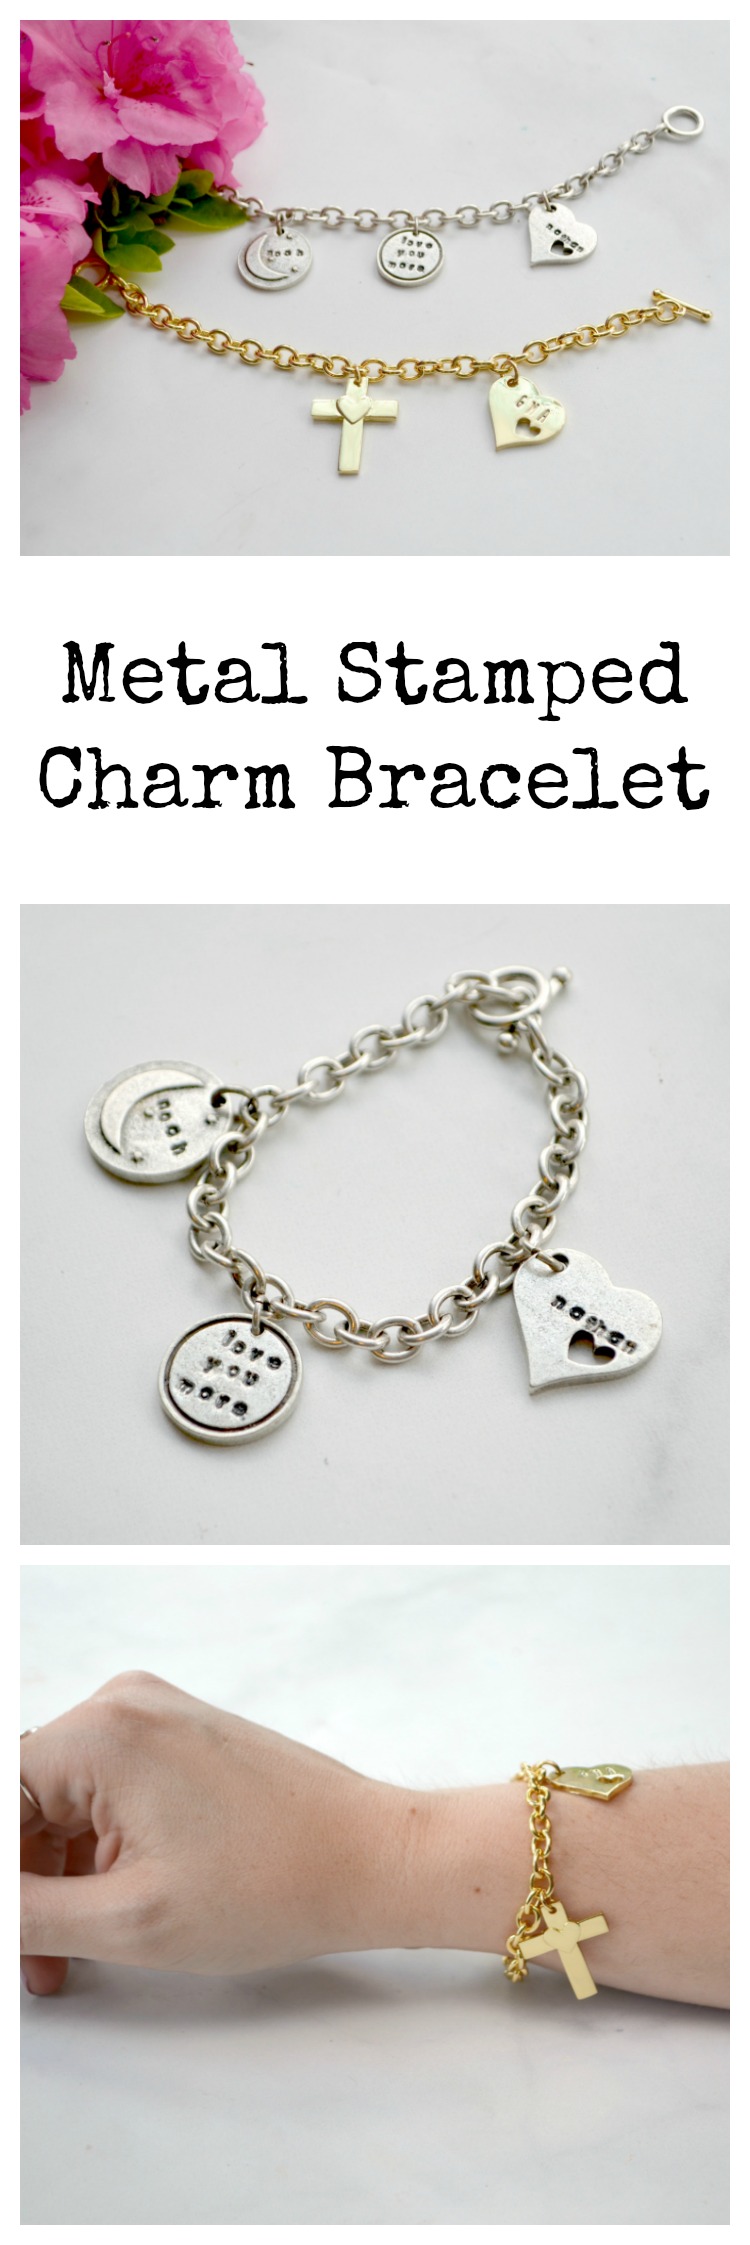 Metal Stamped Charm Bracelet